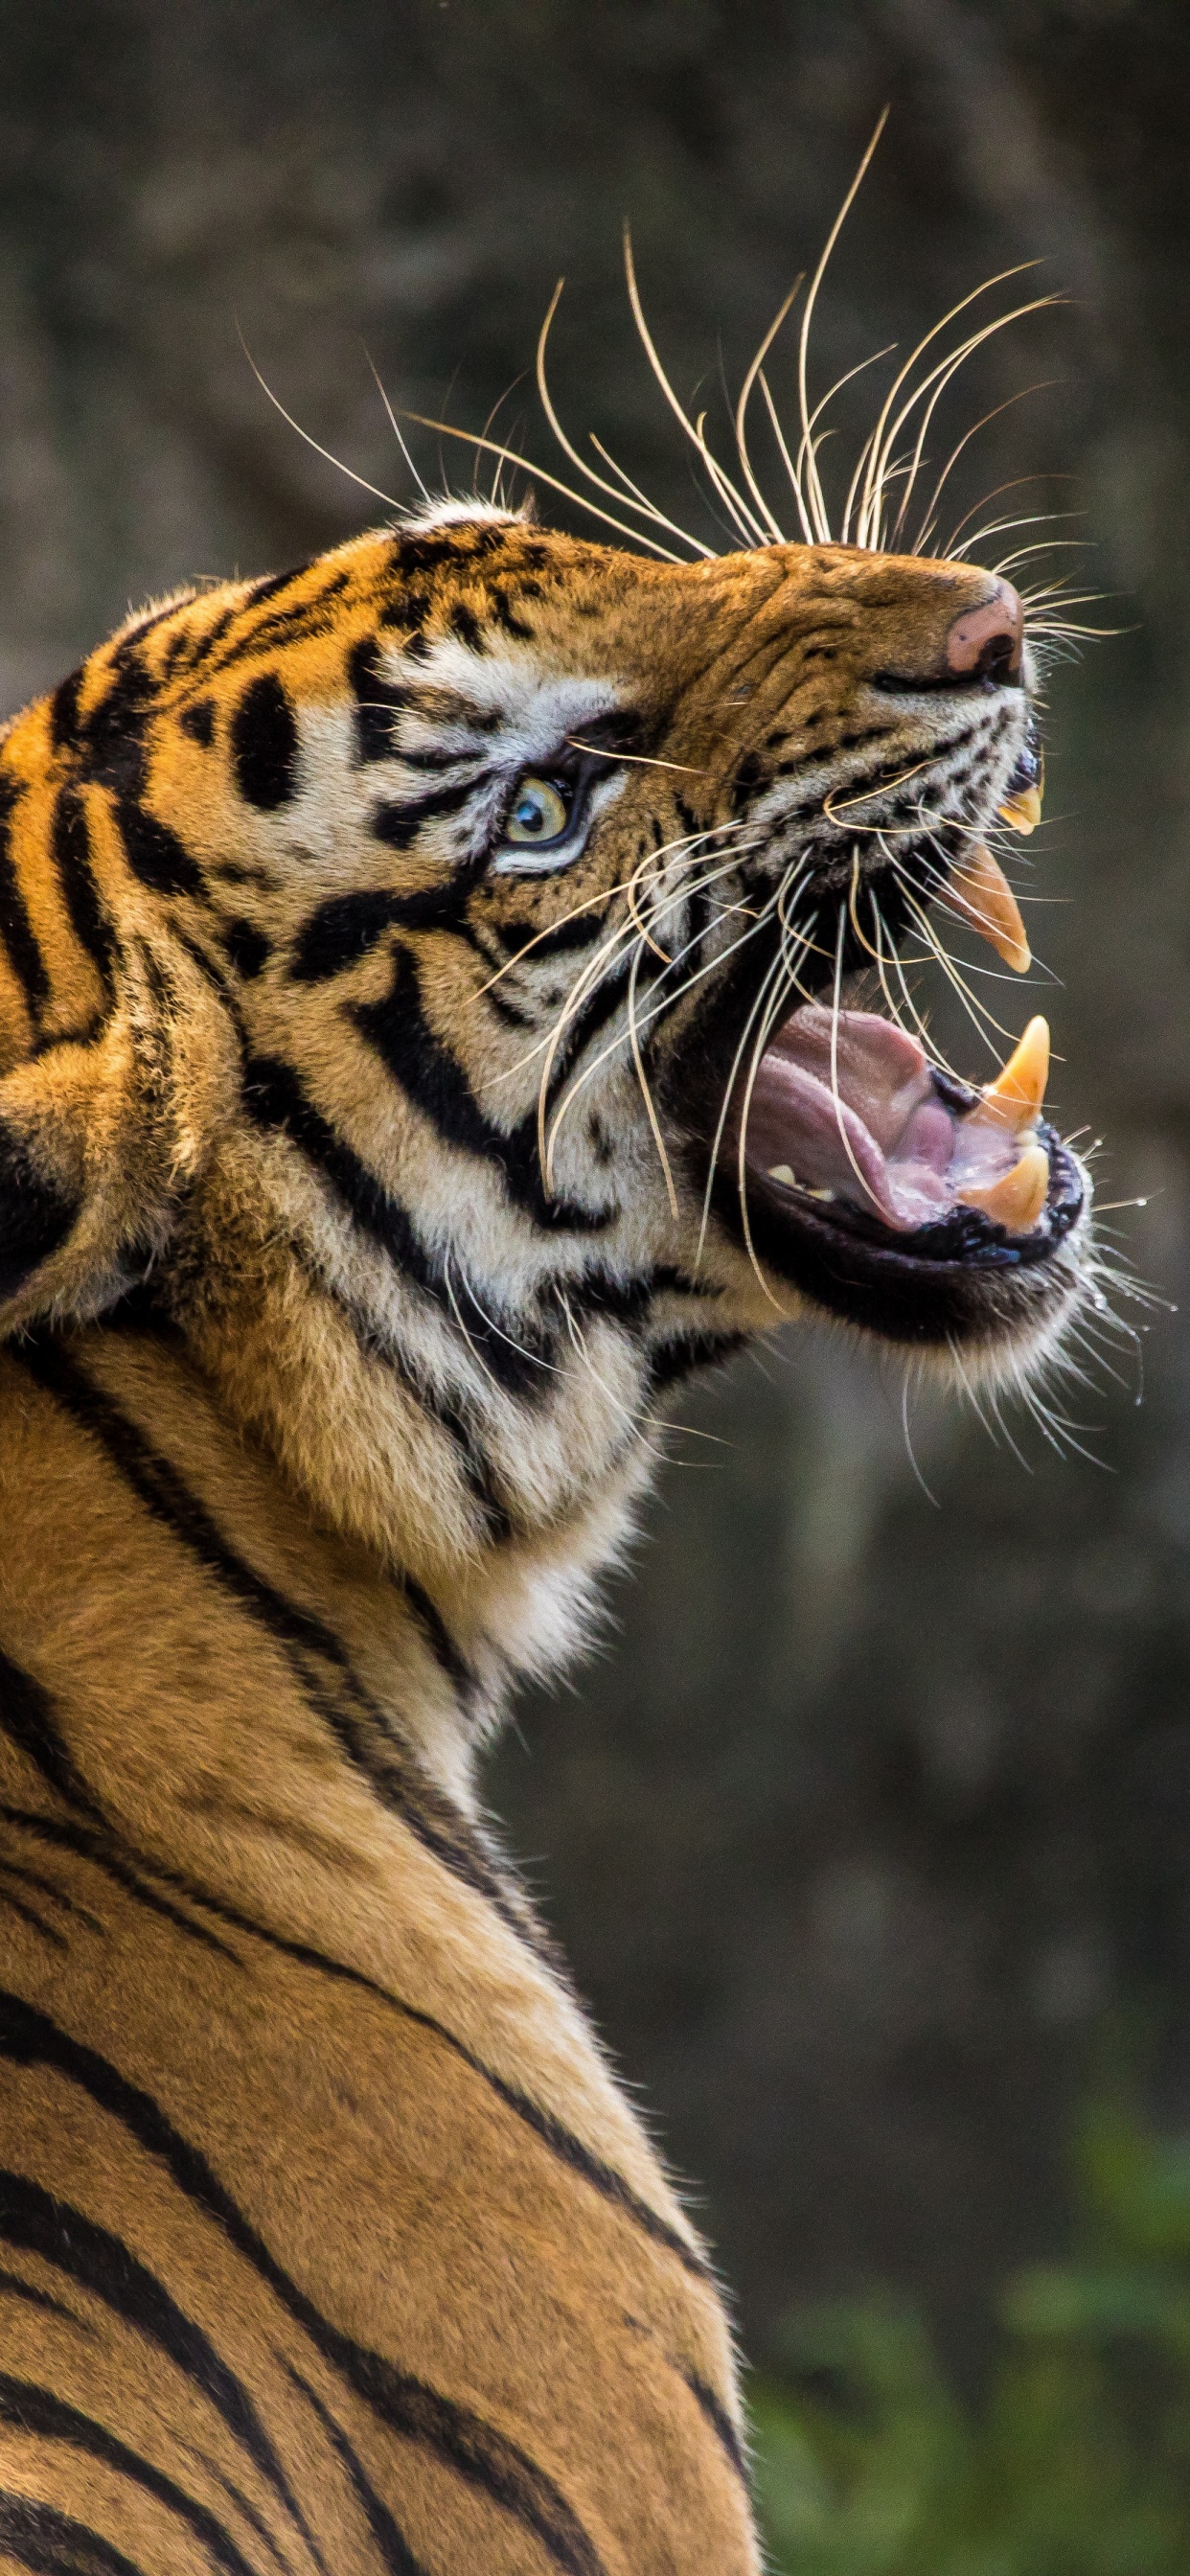 Wallpaper ID: 11900 / tiger, predator, wildlife, big cat, striped, 4k  Wallpaper